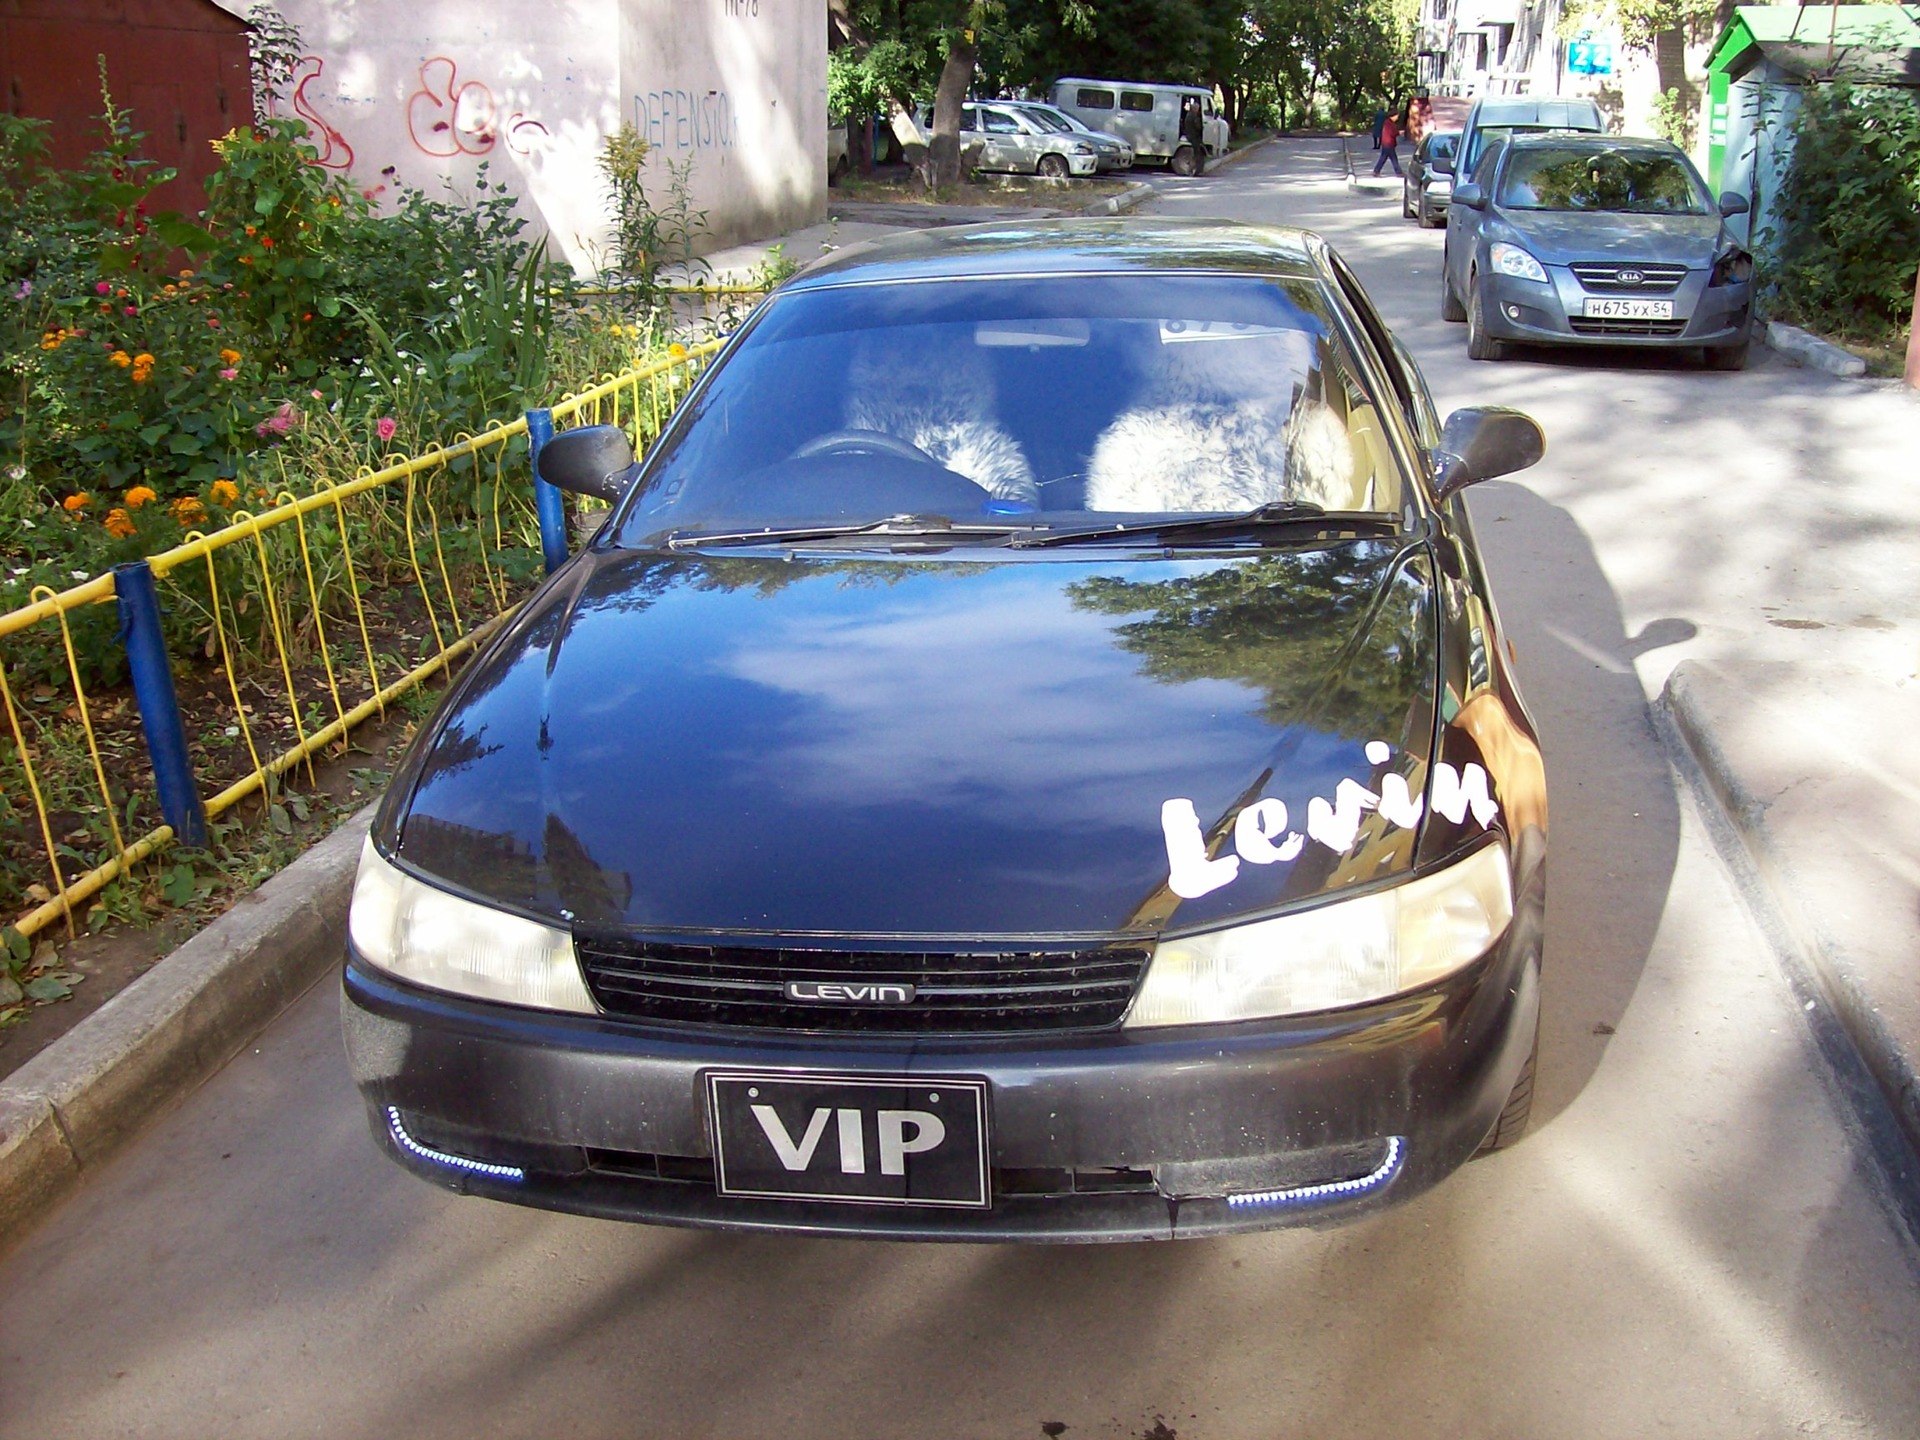     Toyota Corolla Levin 16 1993 